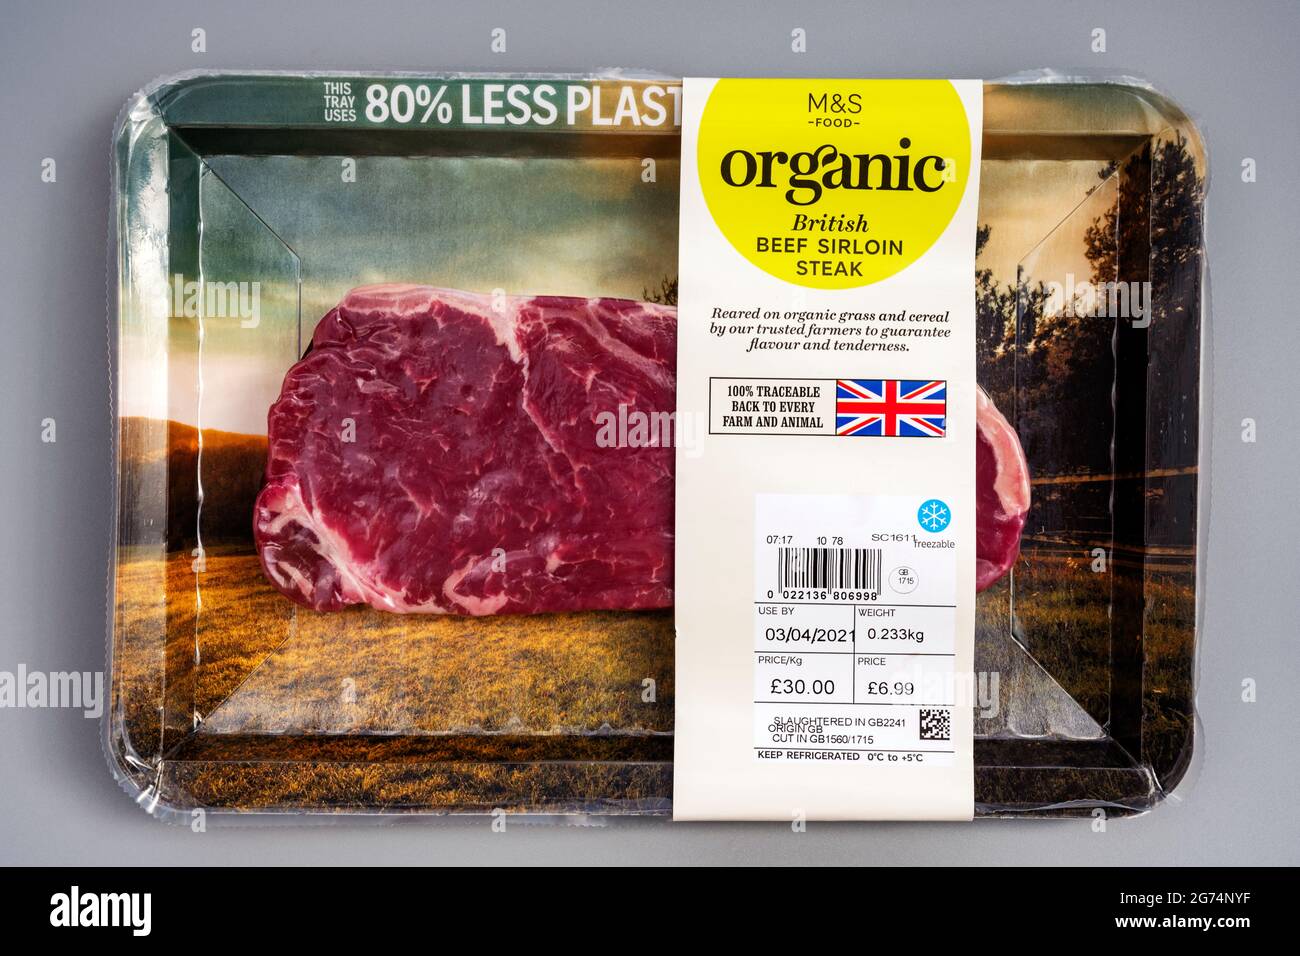 M&S bistecca di manzo inglese biologica Foto Stock